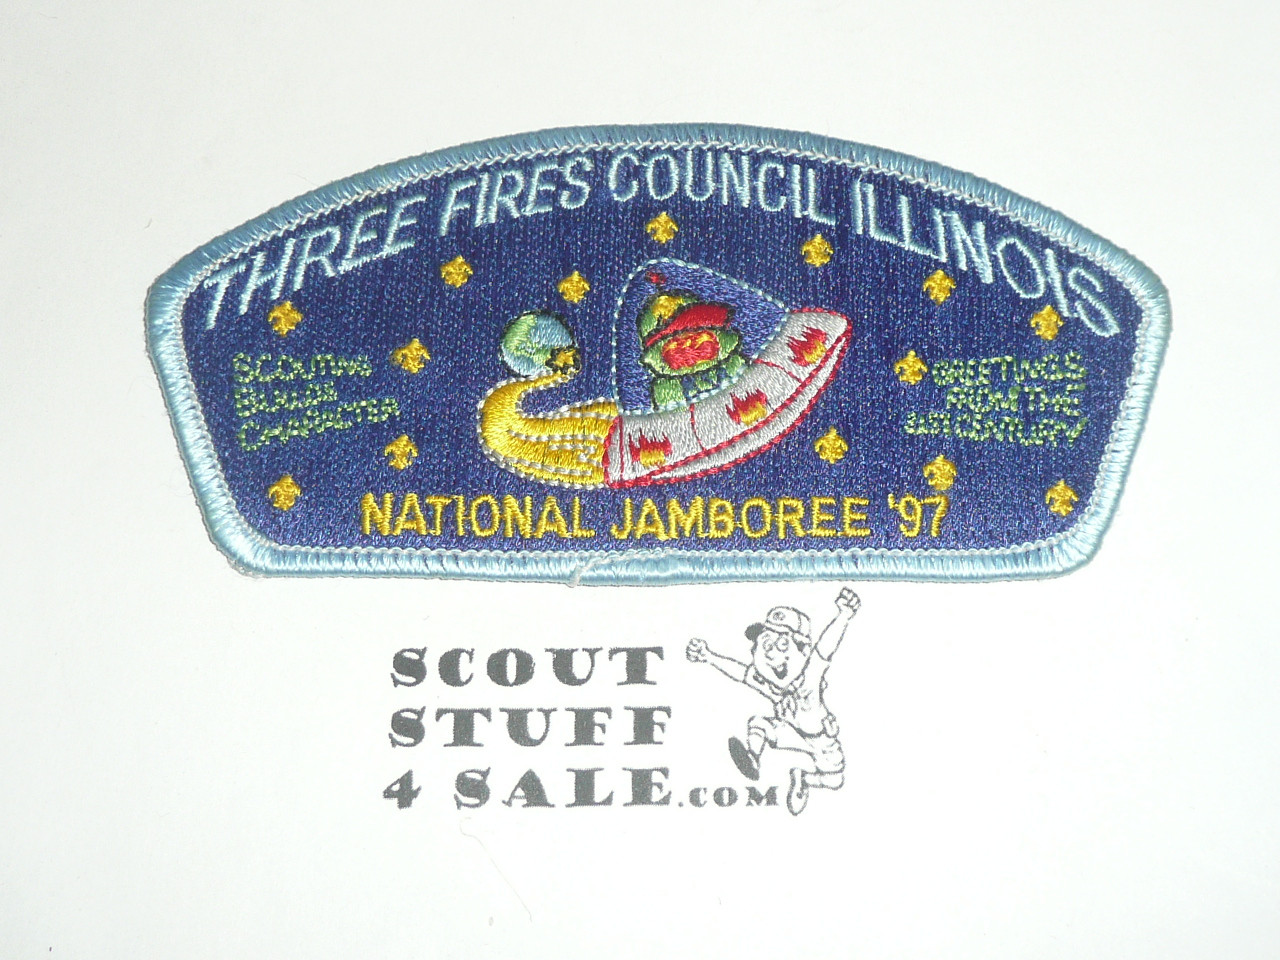 1997 National Jamboree JSP - Three Fires Council